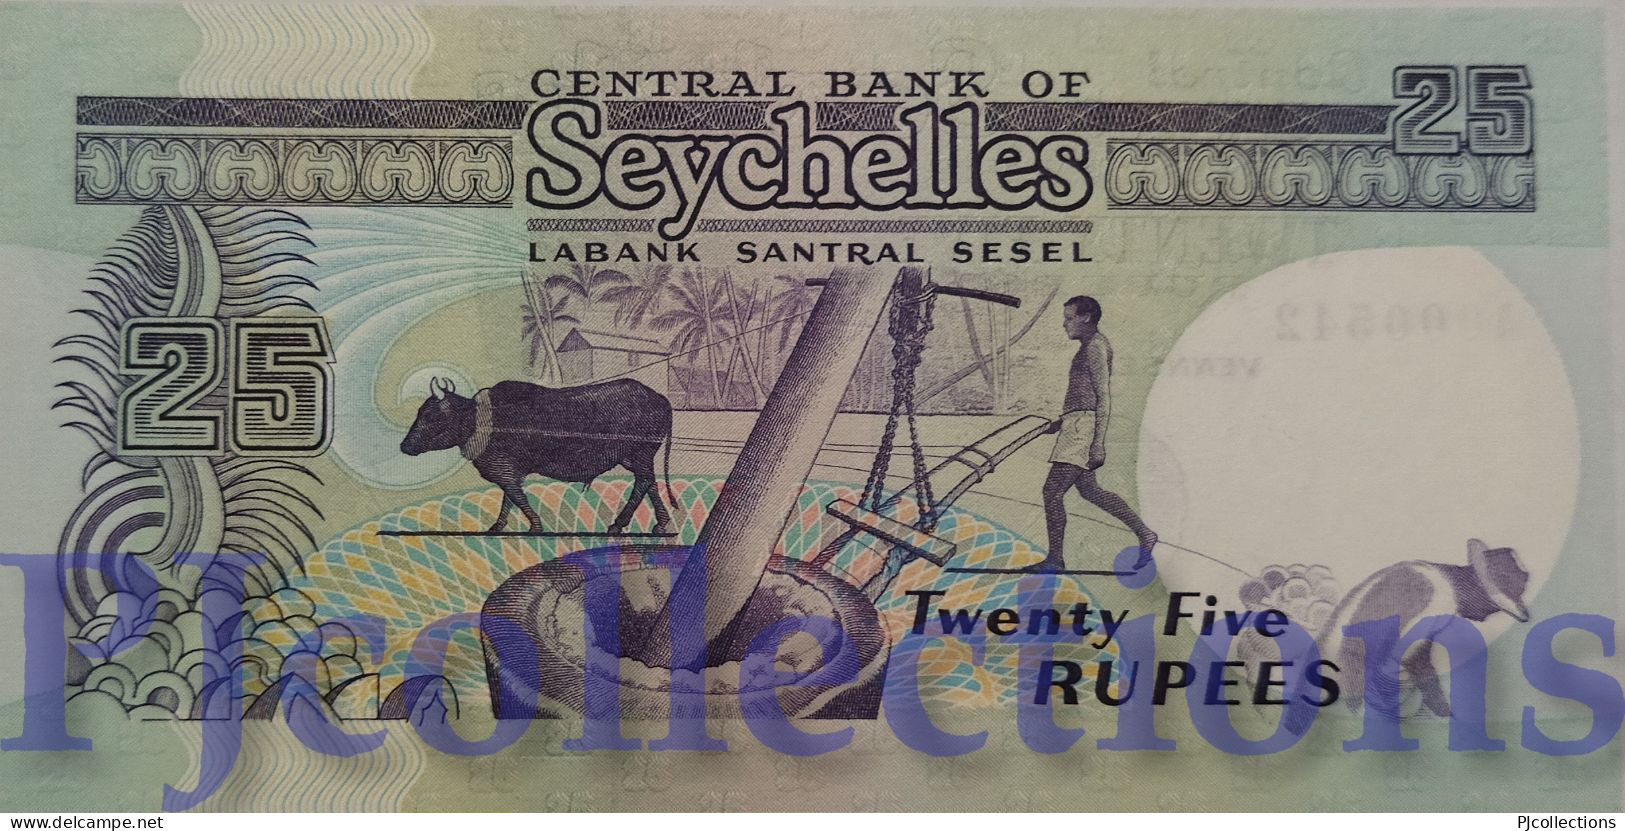 SEYCHELLES 25 RUPEES 1989 PICK 33 UNC LOW SERIAL NUMBER "A000542" - Seychellen